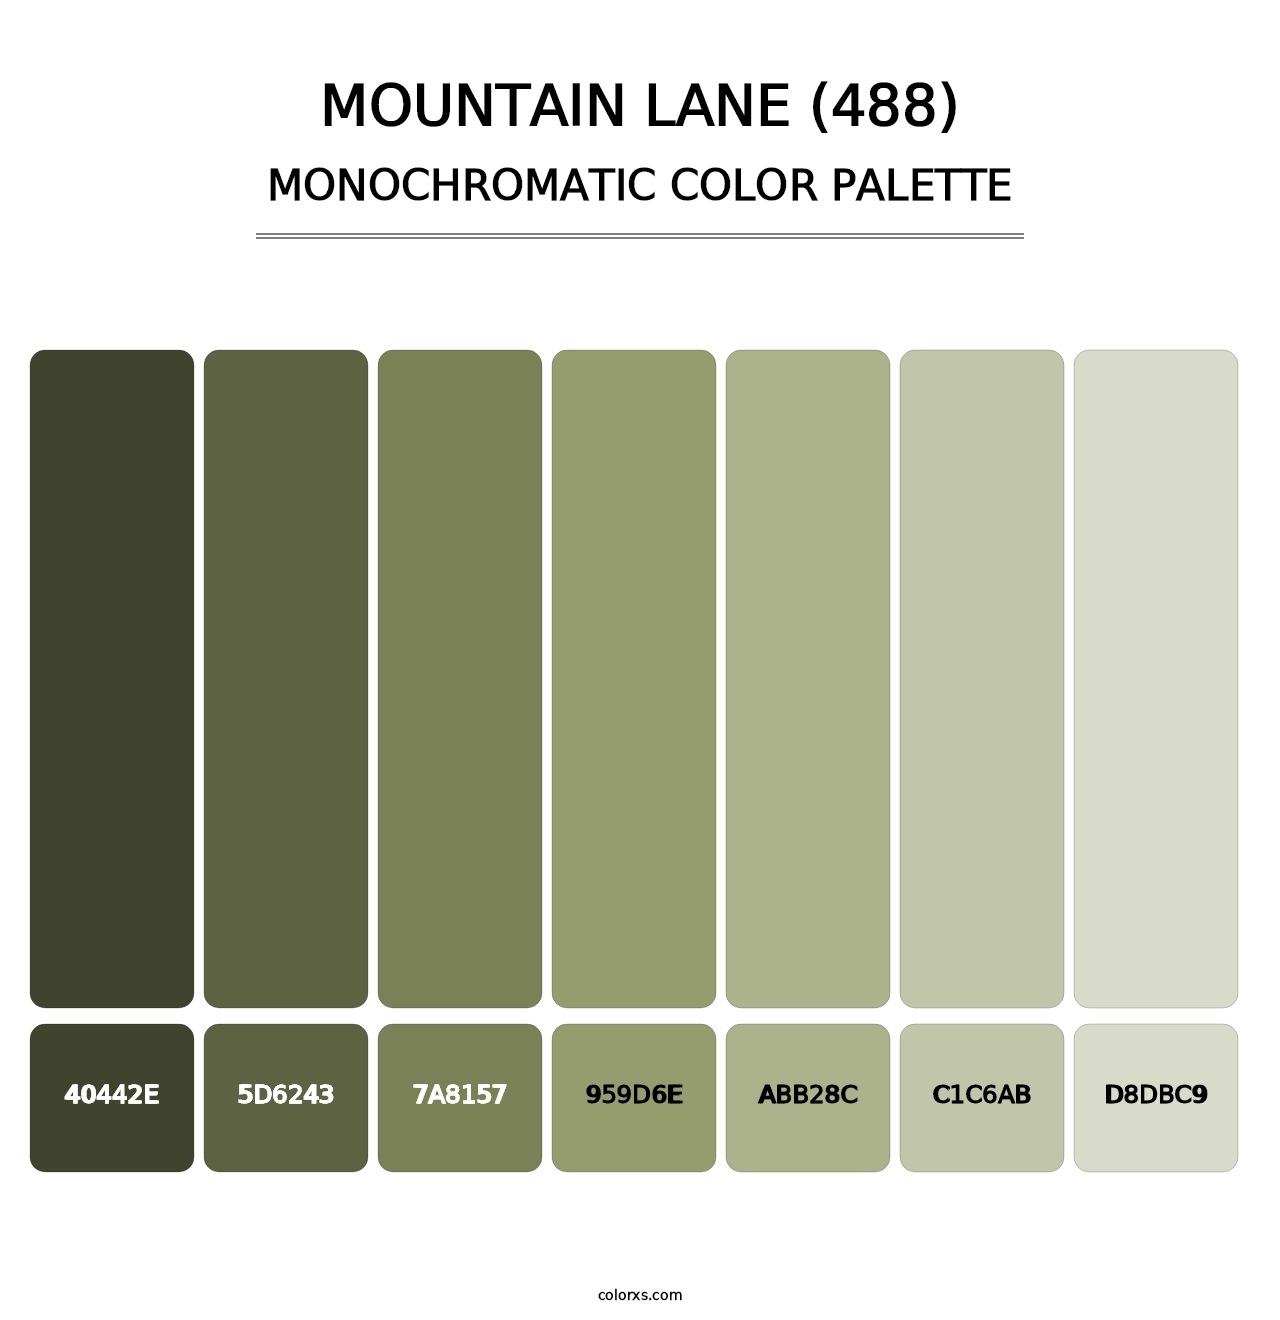 Mountain Lane (488) - Monochromatic Color Palette